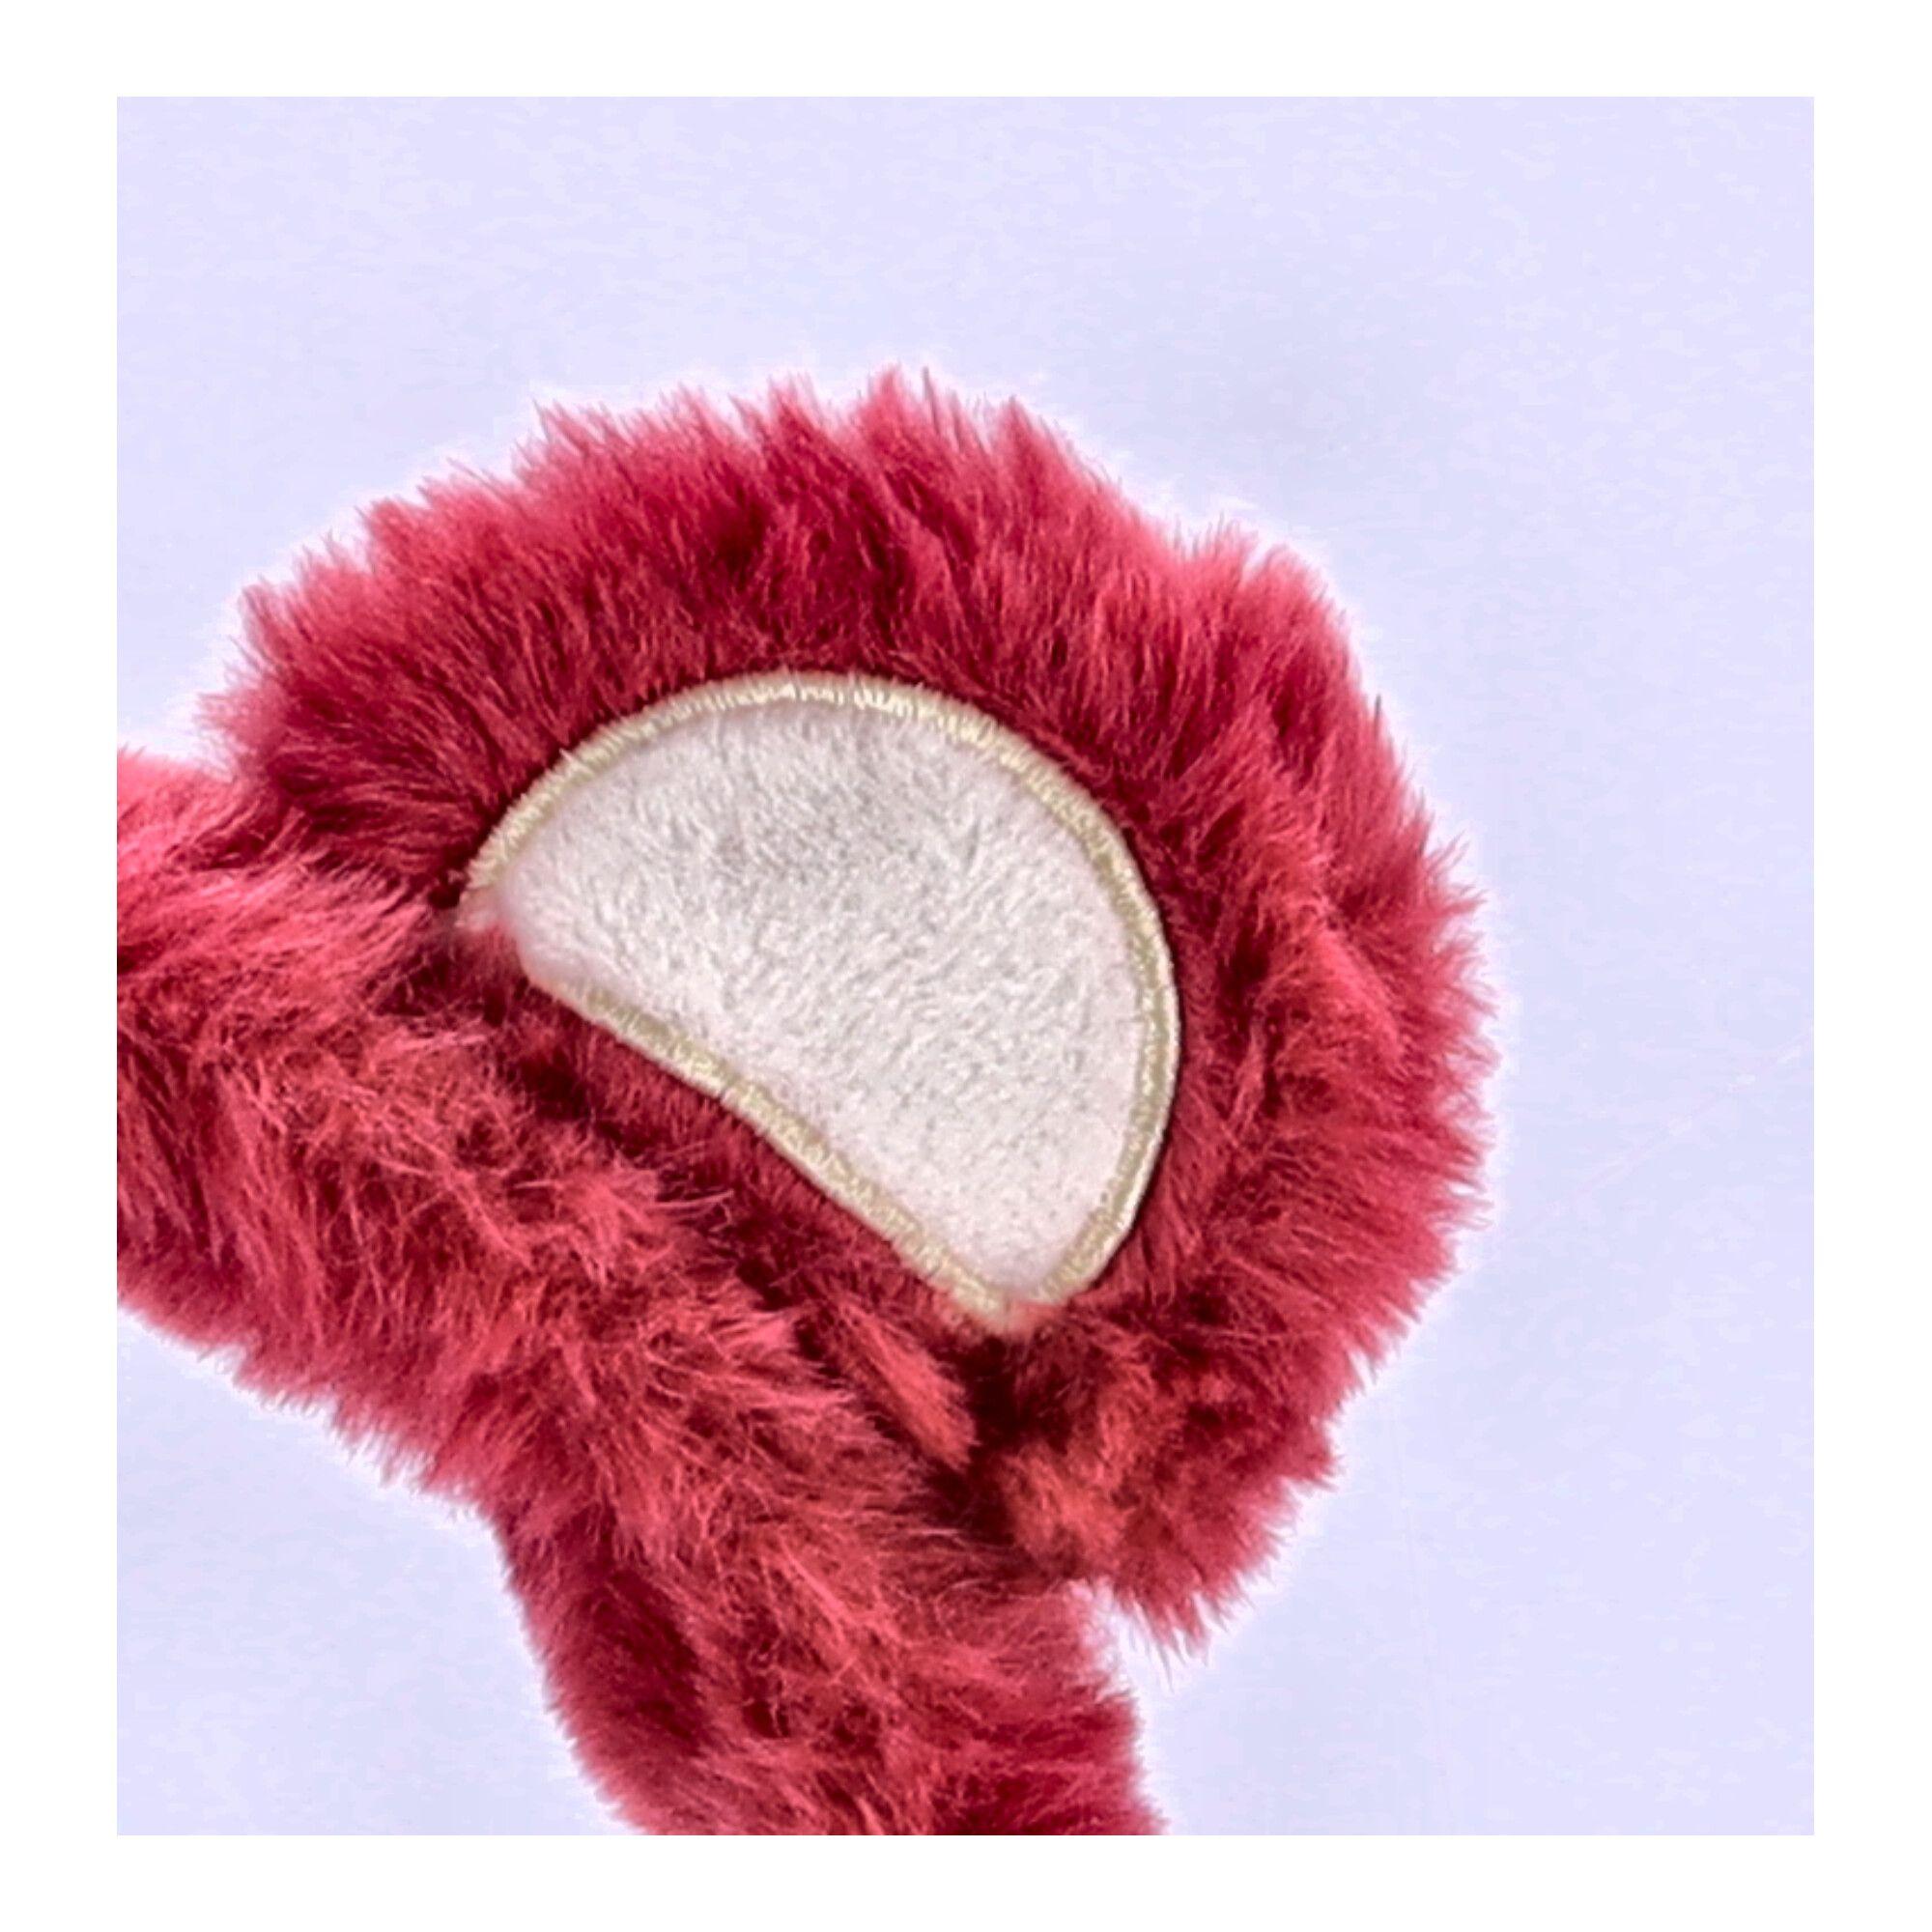 Plush headband with bear ears - dark pink.